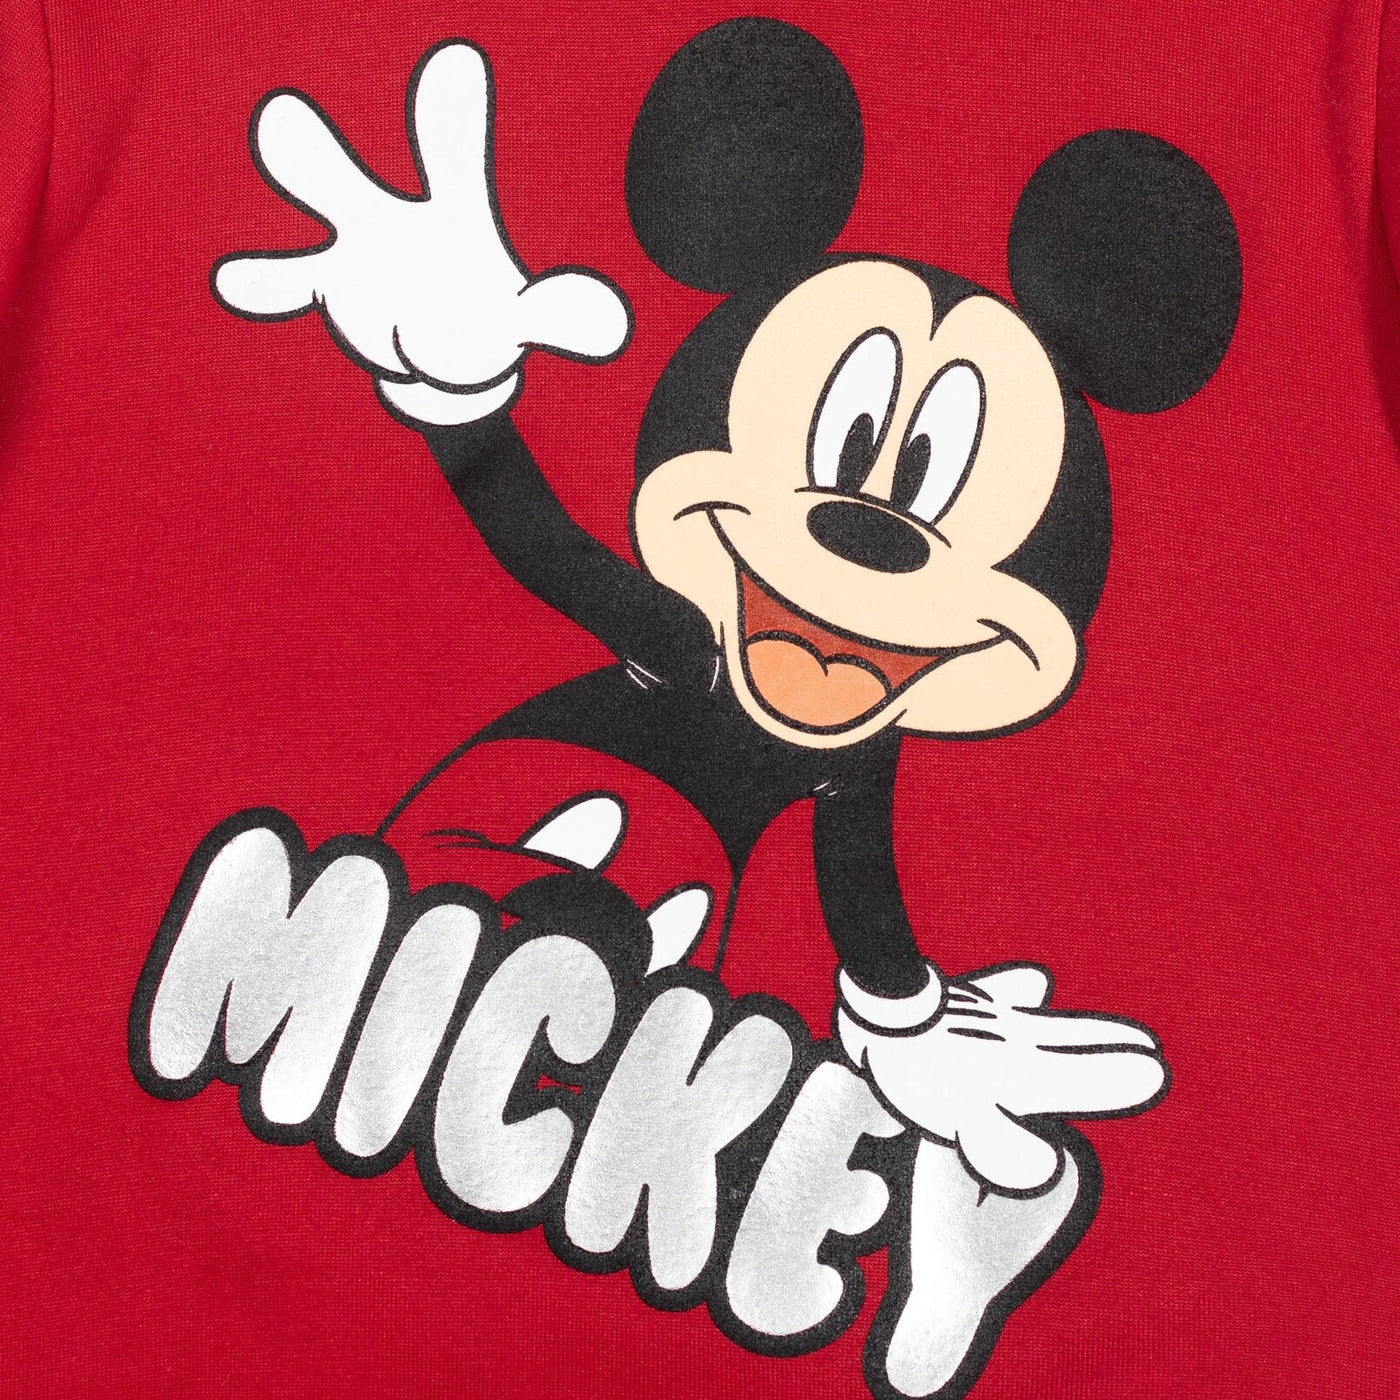 Disney Mickey Mouse Sweatshirt and Jogger Pants Set - imagikids